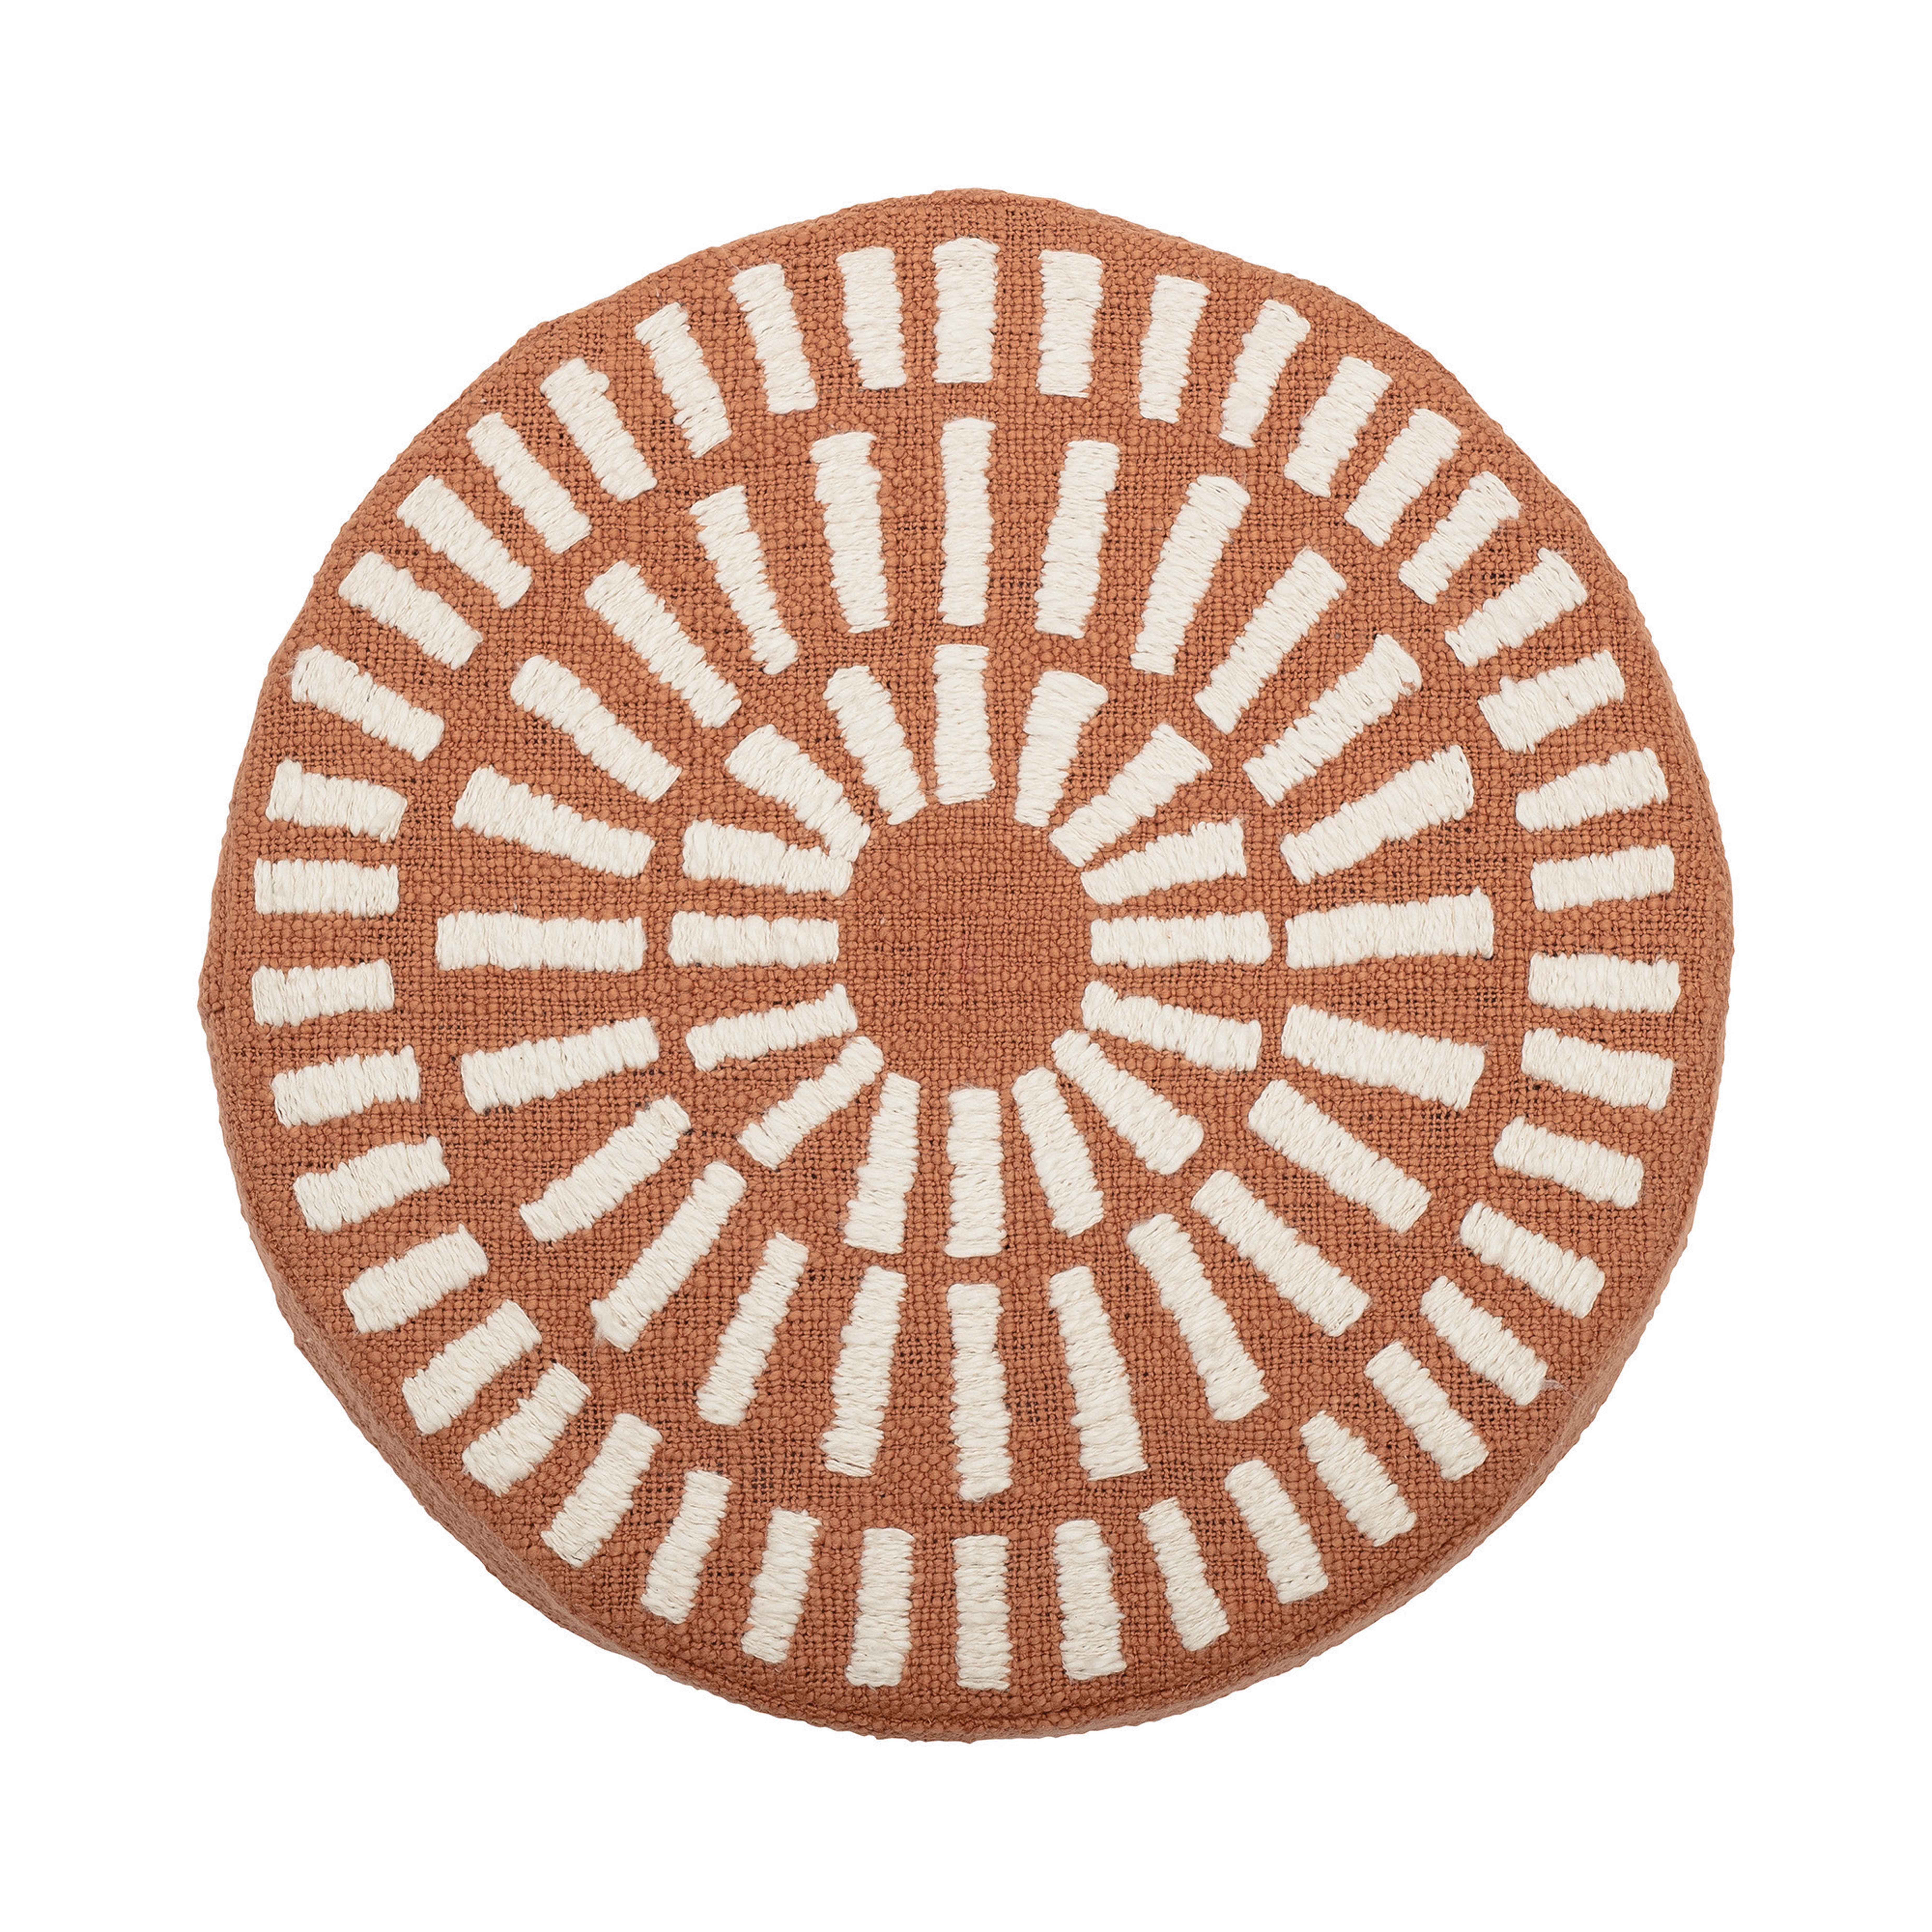 Disk Pillow with Raised Pattern, Burnt Orange & White Cotton, 16" x 16" - Moss & Wilder